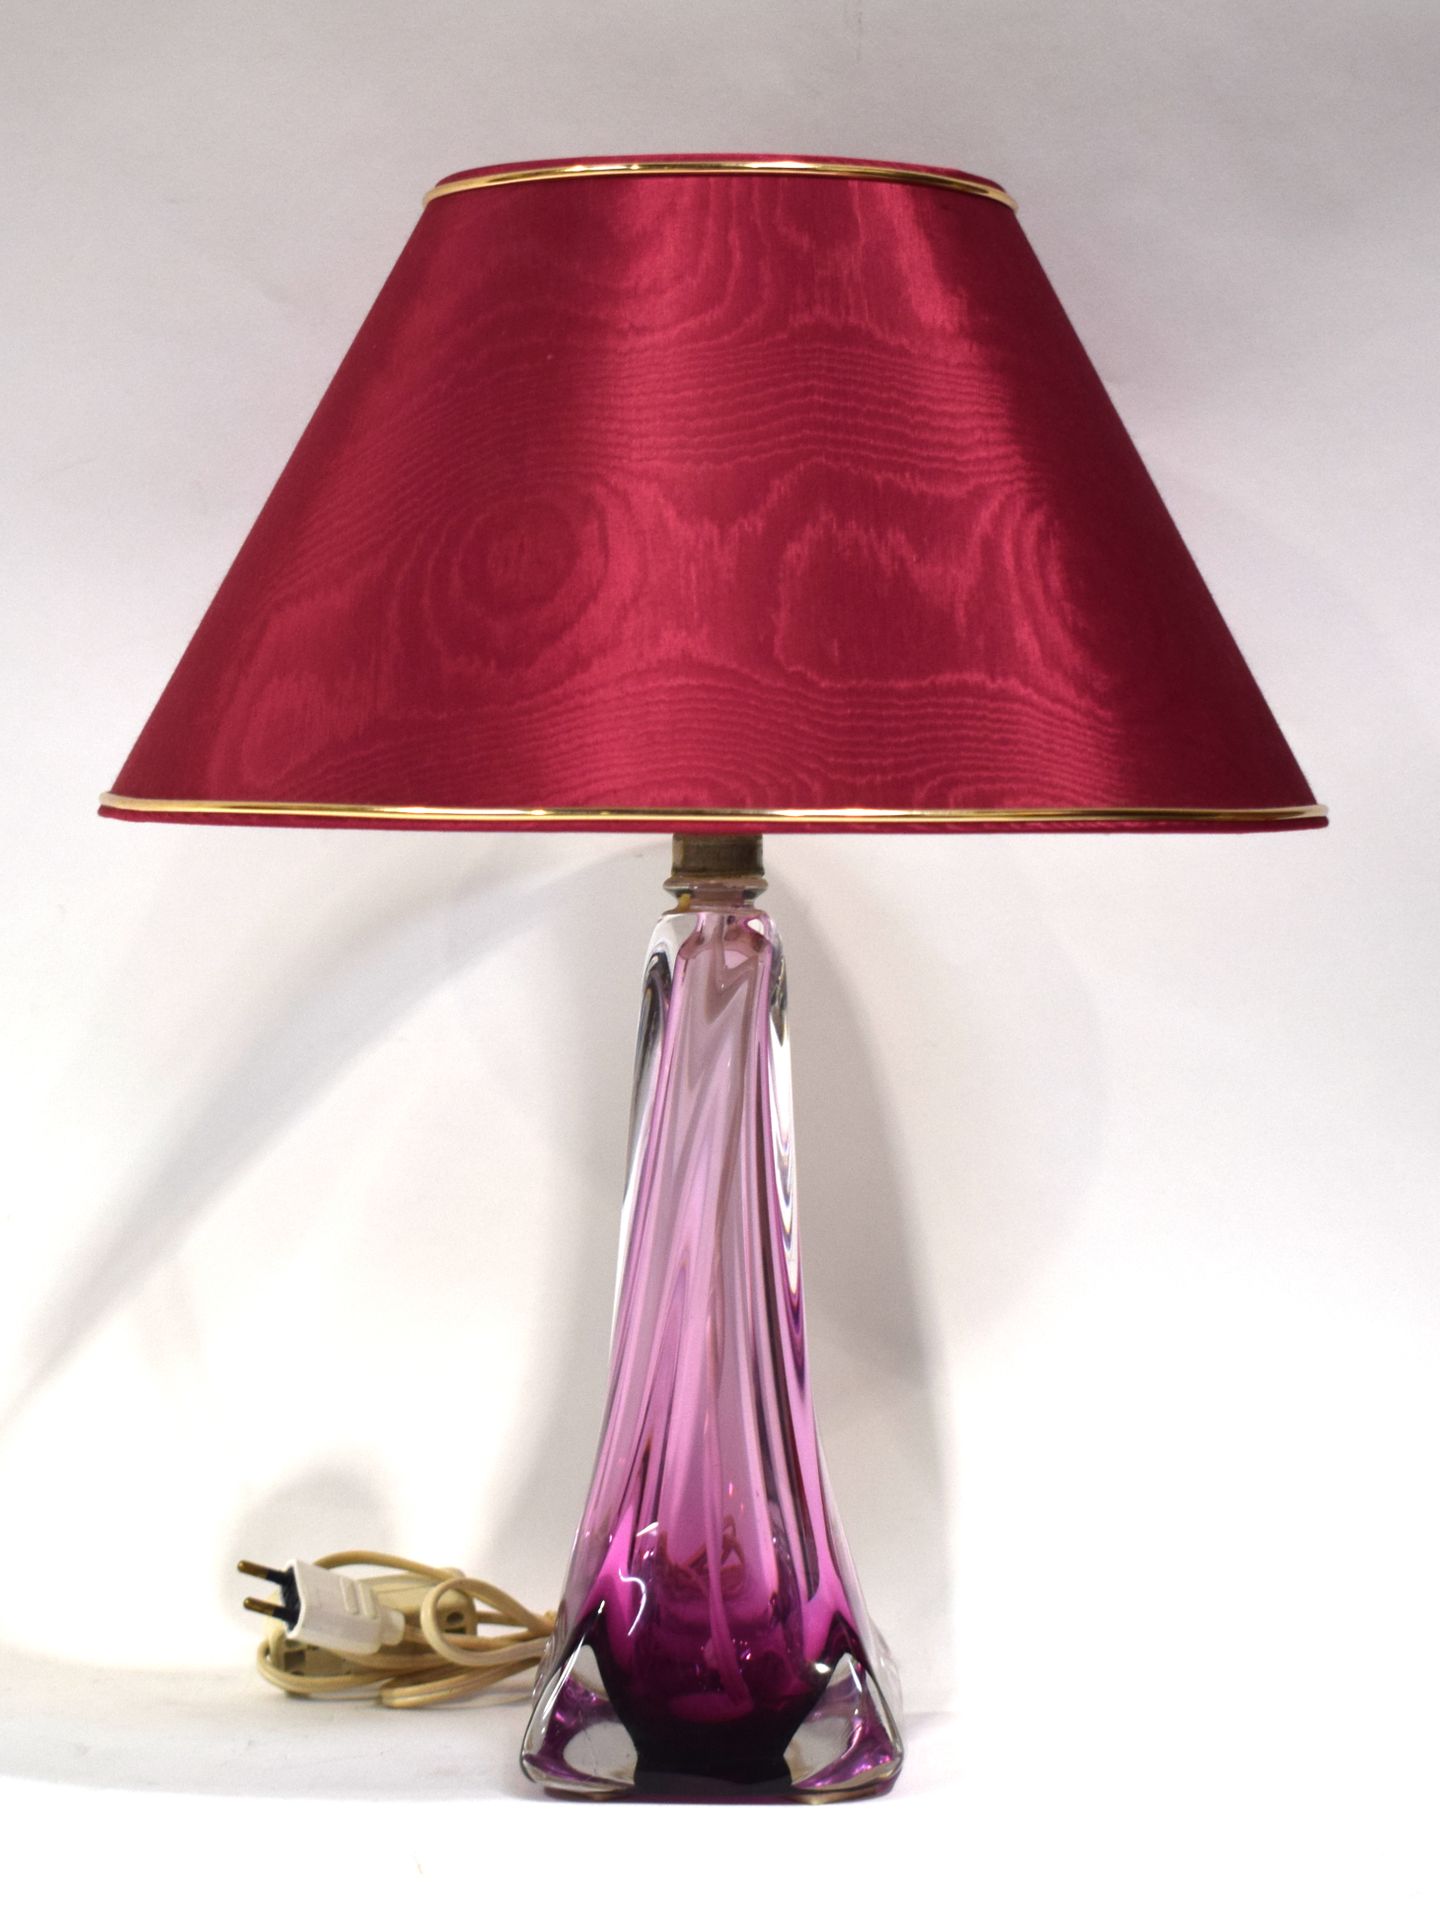 Null Lampe en cristal rose VAL SAINT LAMBERT, fut torsadée, hauteur 26 cm

|

Pi&hellip;